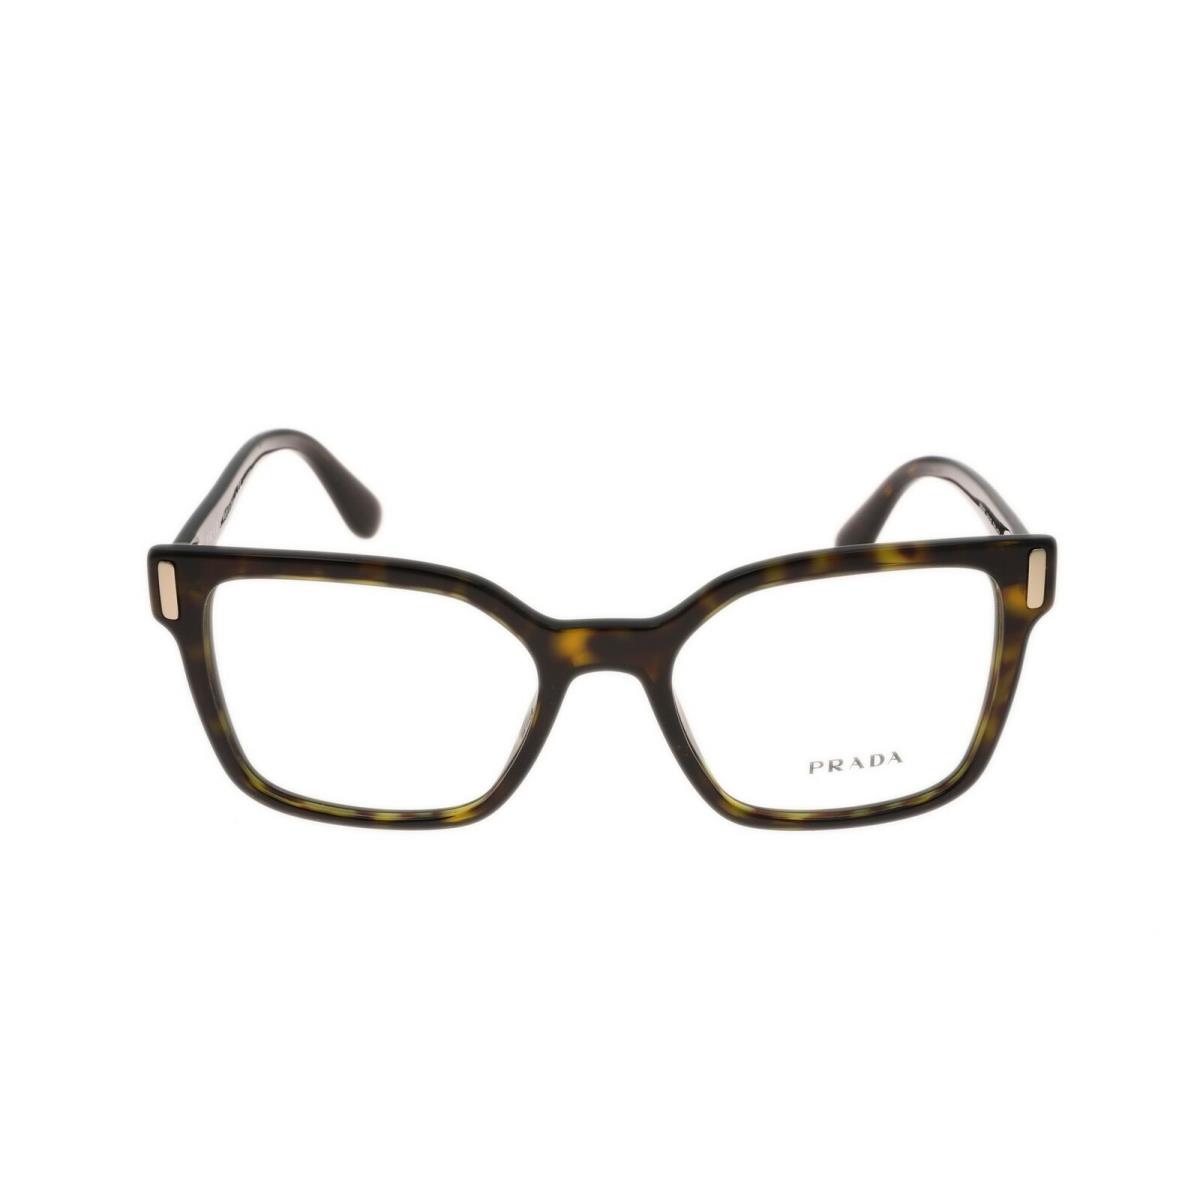 Prada 181241 Womens Optical Full Rim Square Eyeglasses Tortoise Size 50-18-135